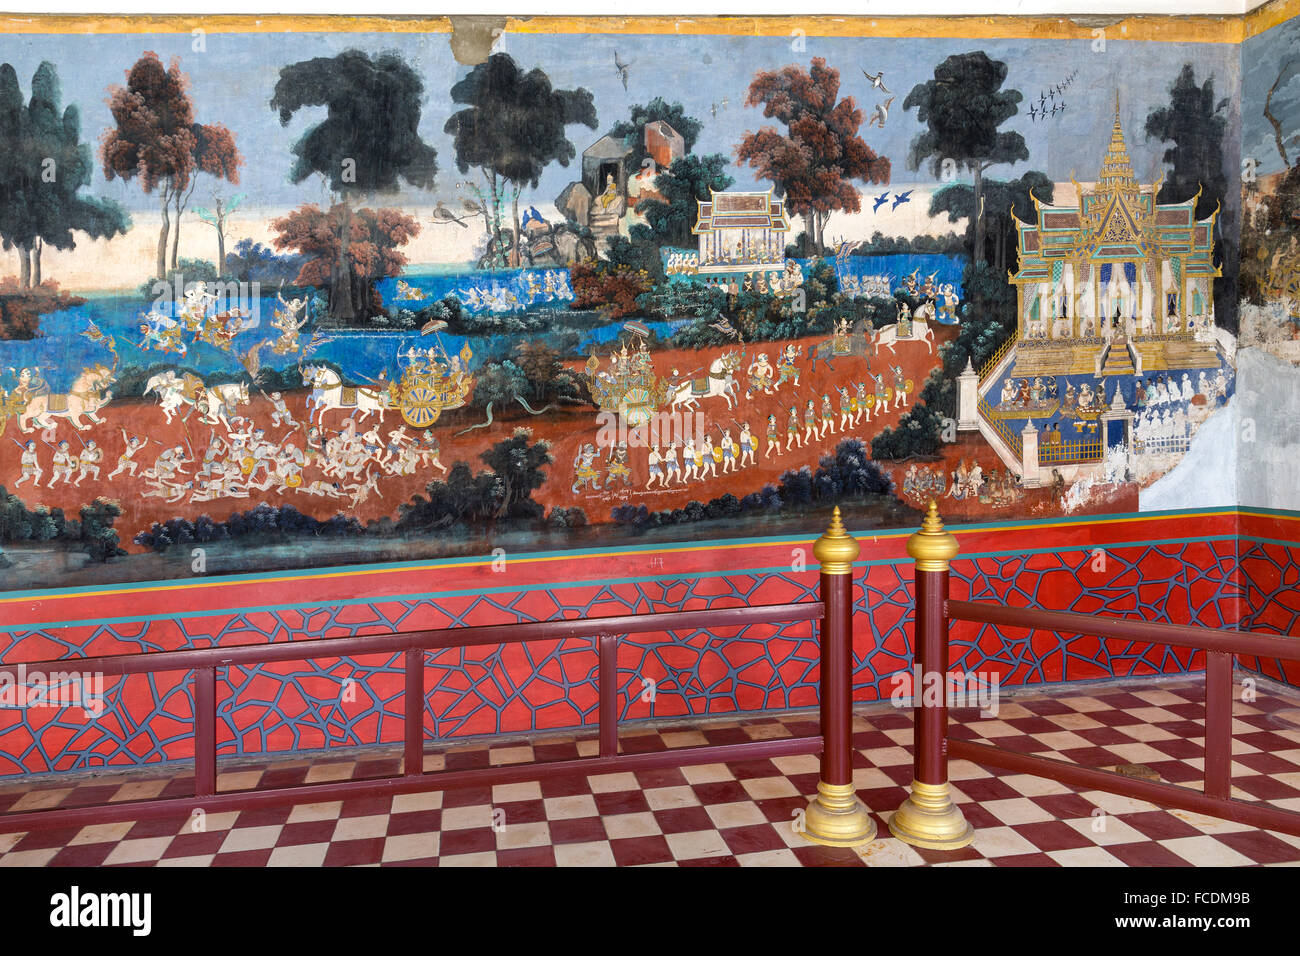 Wandbild aus dem Ramayana-Epos, Wandbild, Silber-Pagode, Königspalast, Phnom Penh, Kambodscha Stockfoto